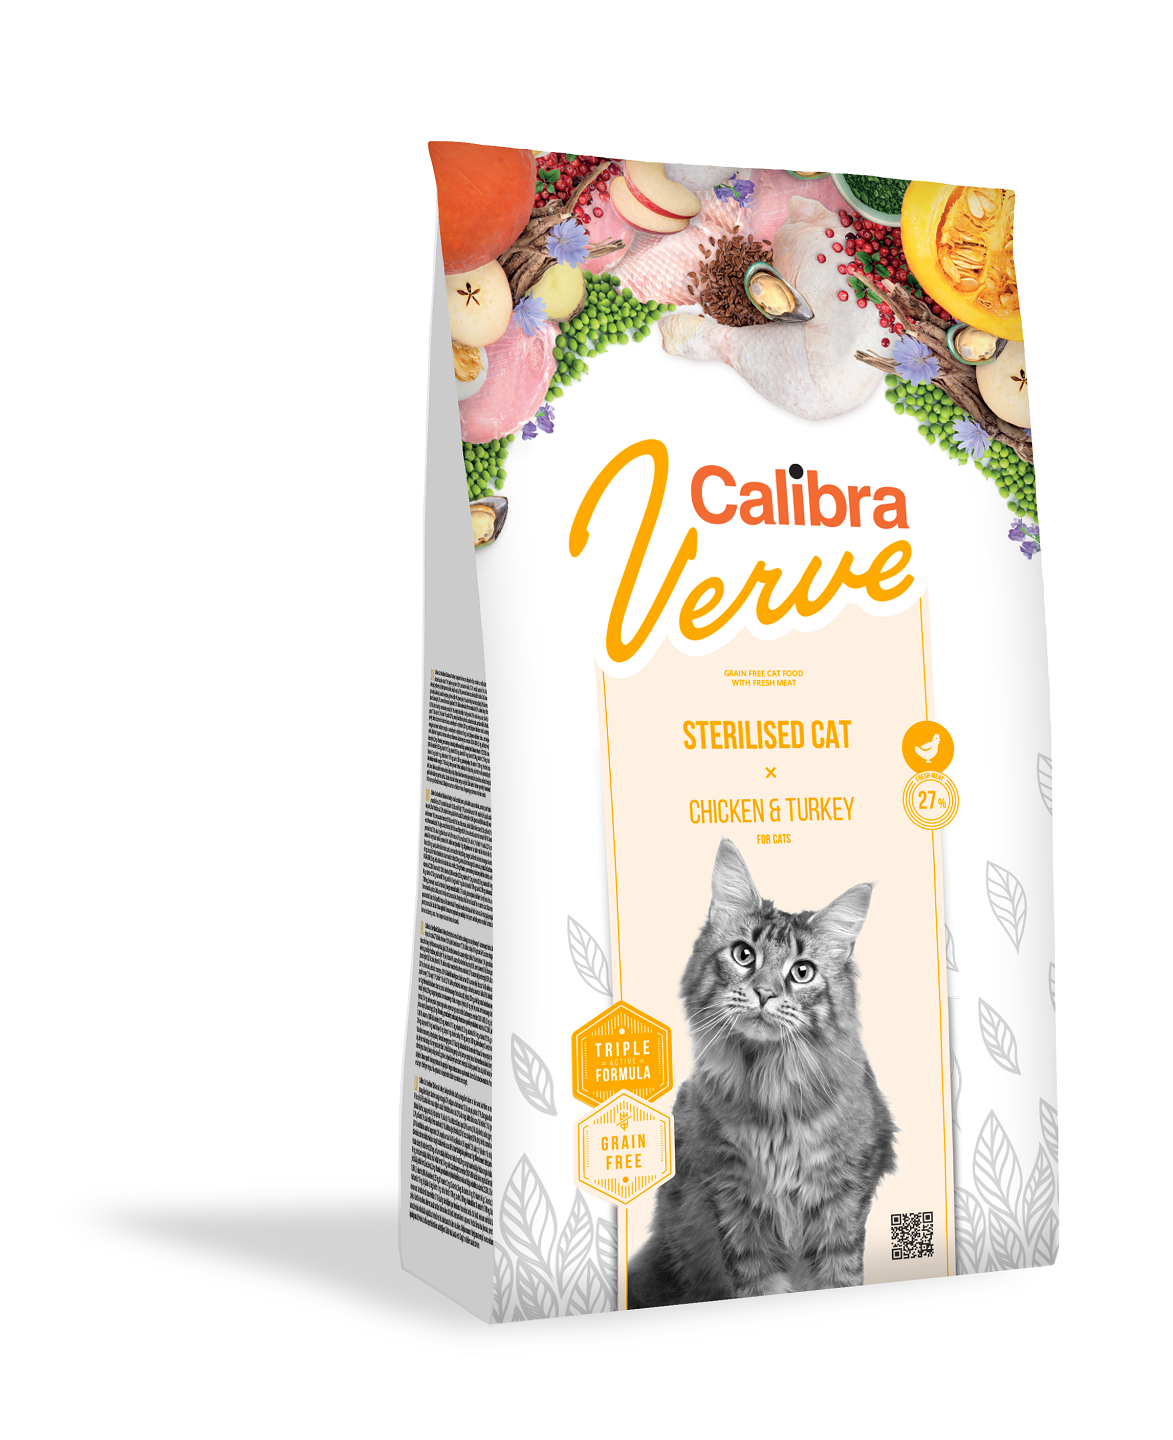 Calibra Cat Verve Grain Free Sterilised, Chicken & Turkey, 3.5 kg petmart